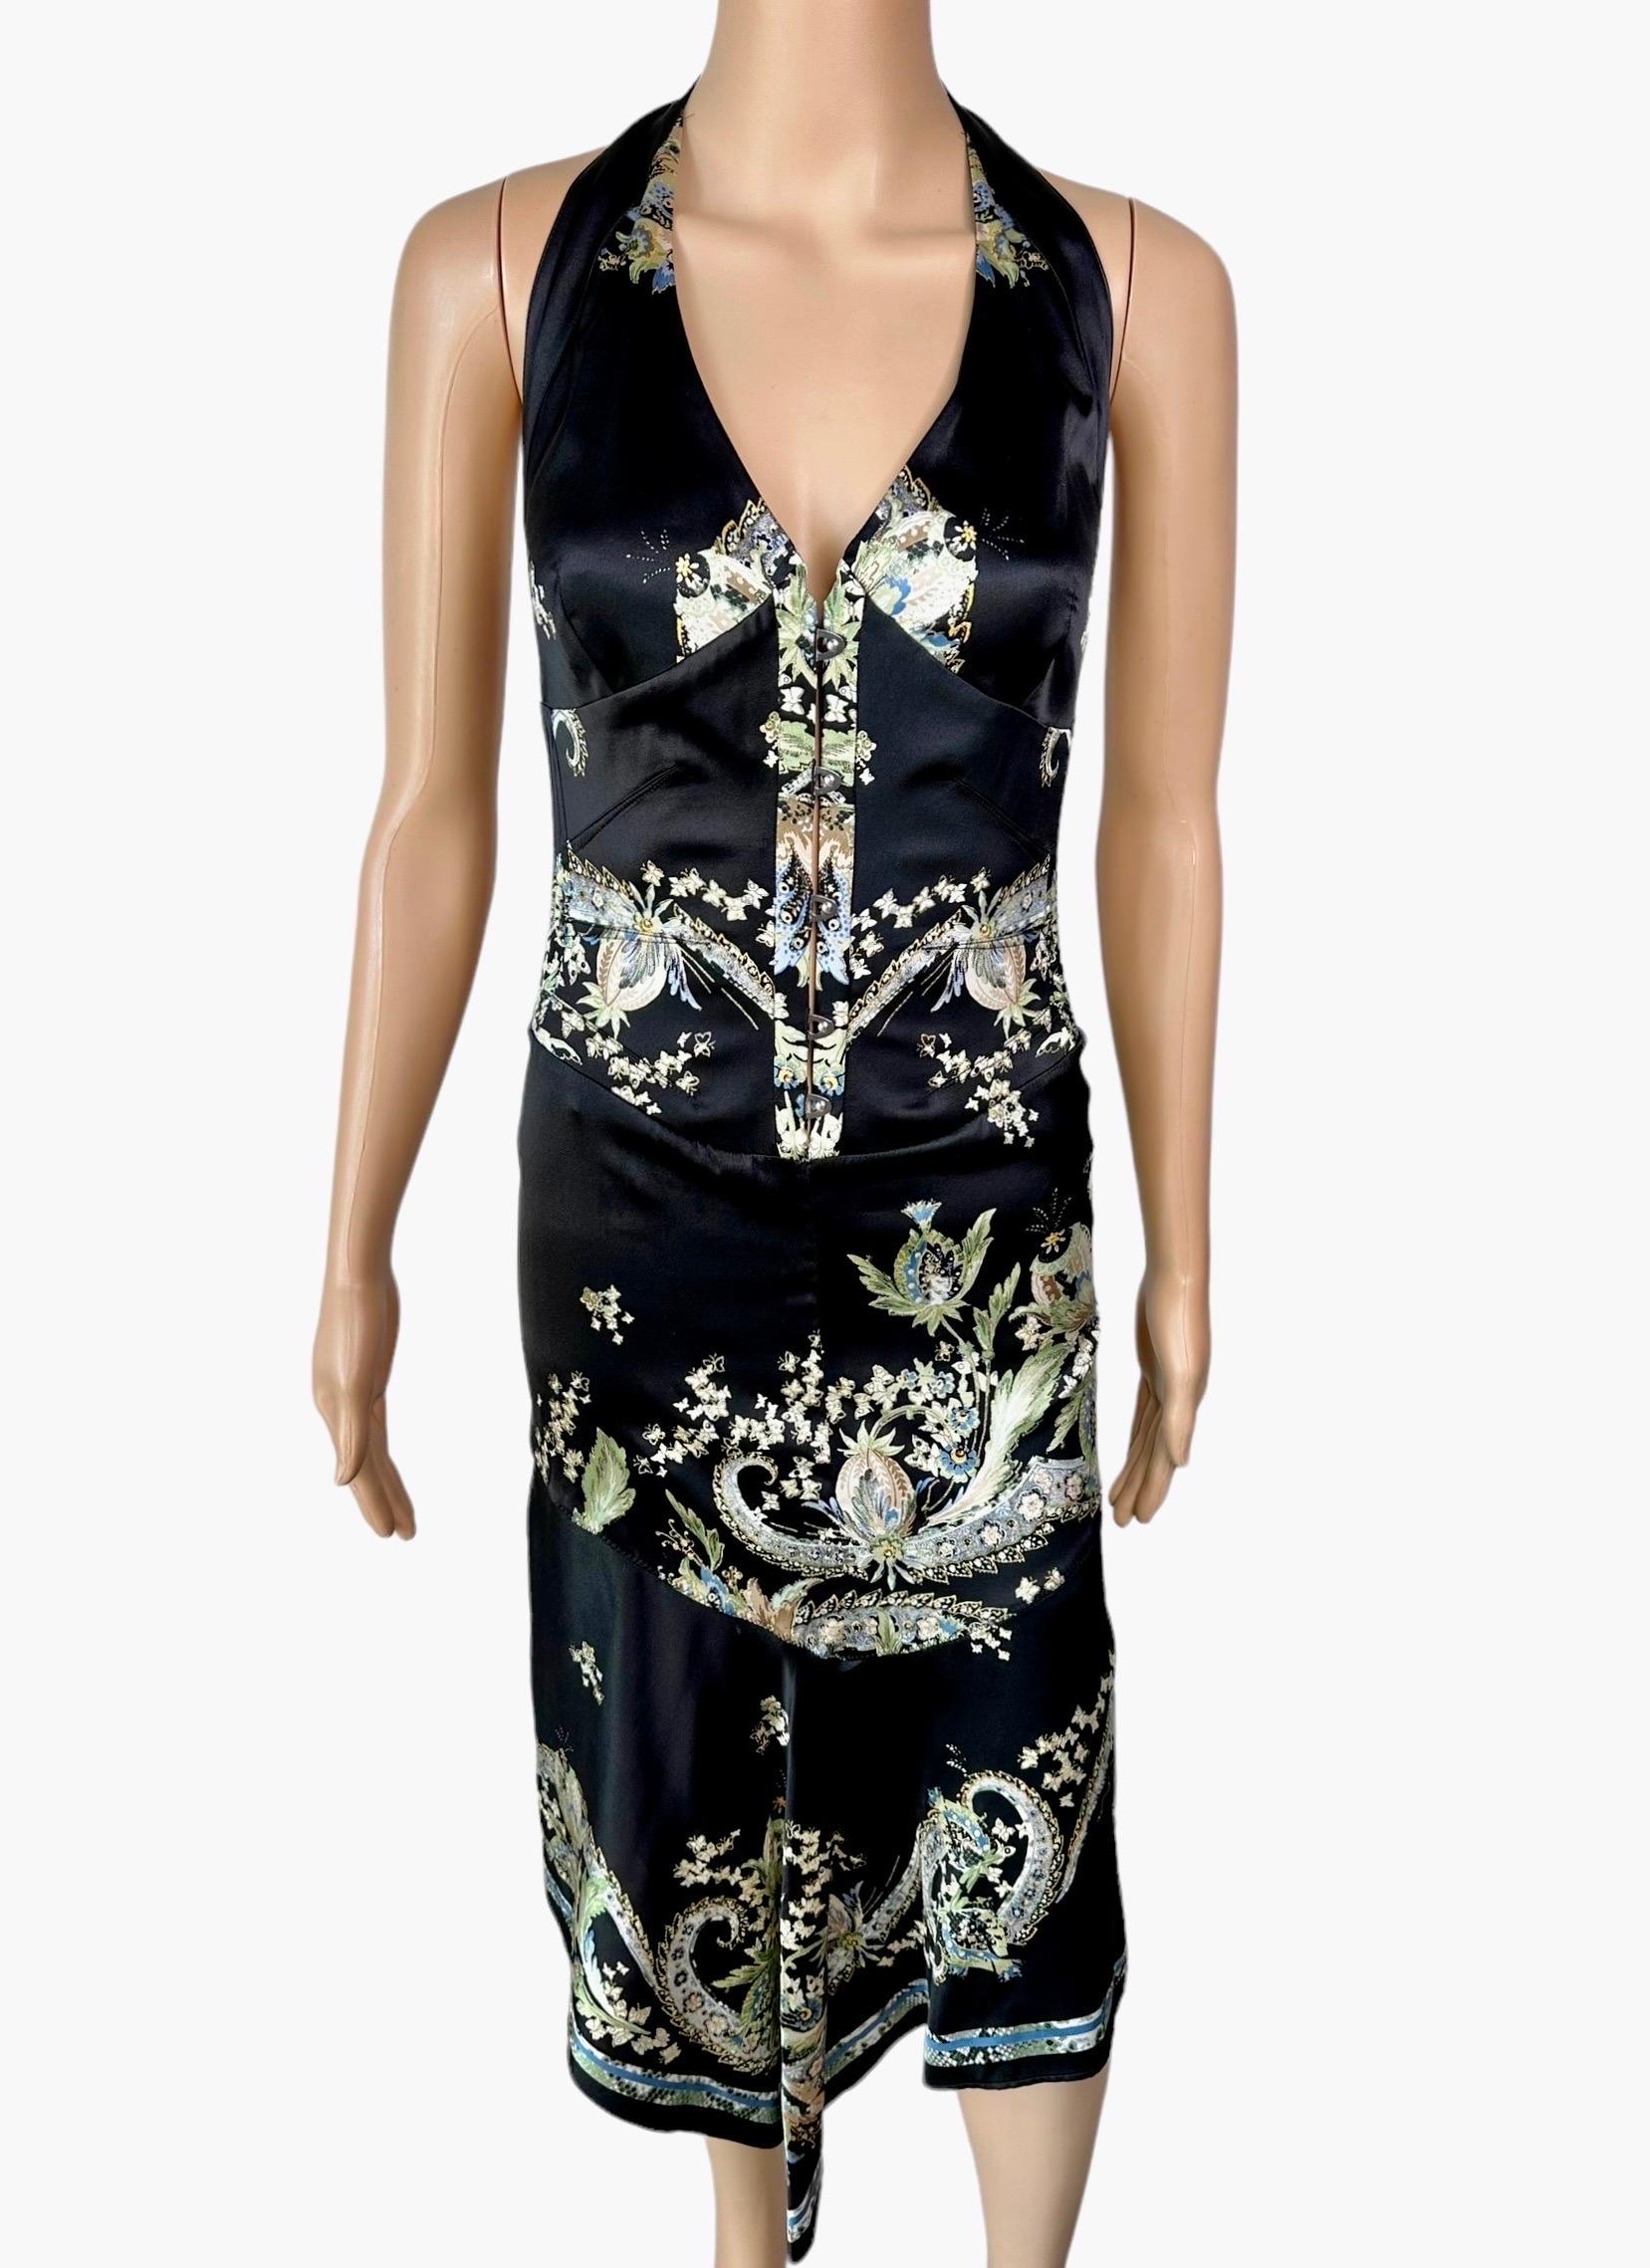 Roberto Cavalli S/S 2003 Corset Lace Up Chinoiserie Print Plunging Neckline Silk Asymmetric Dress Size M